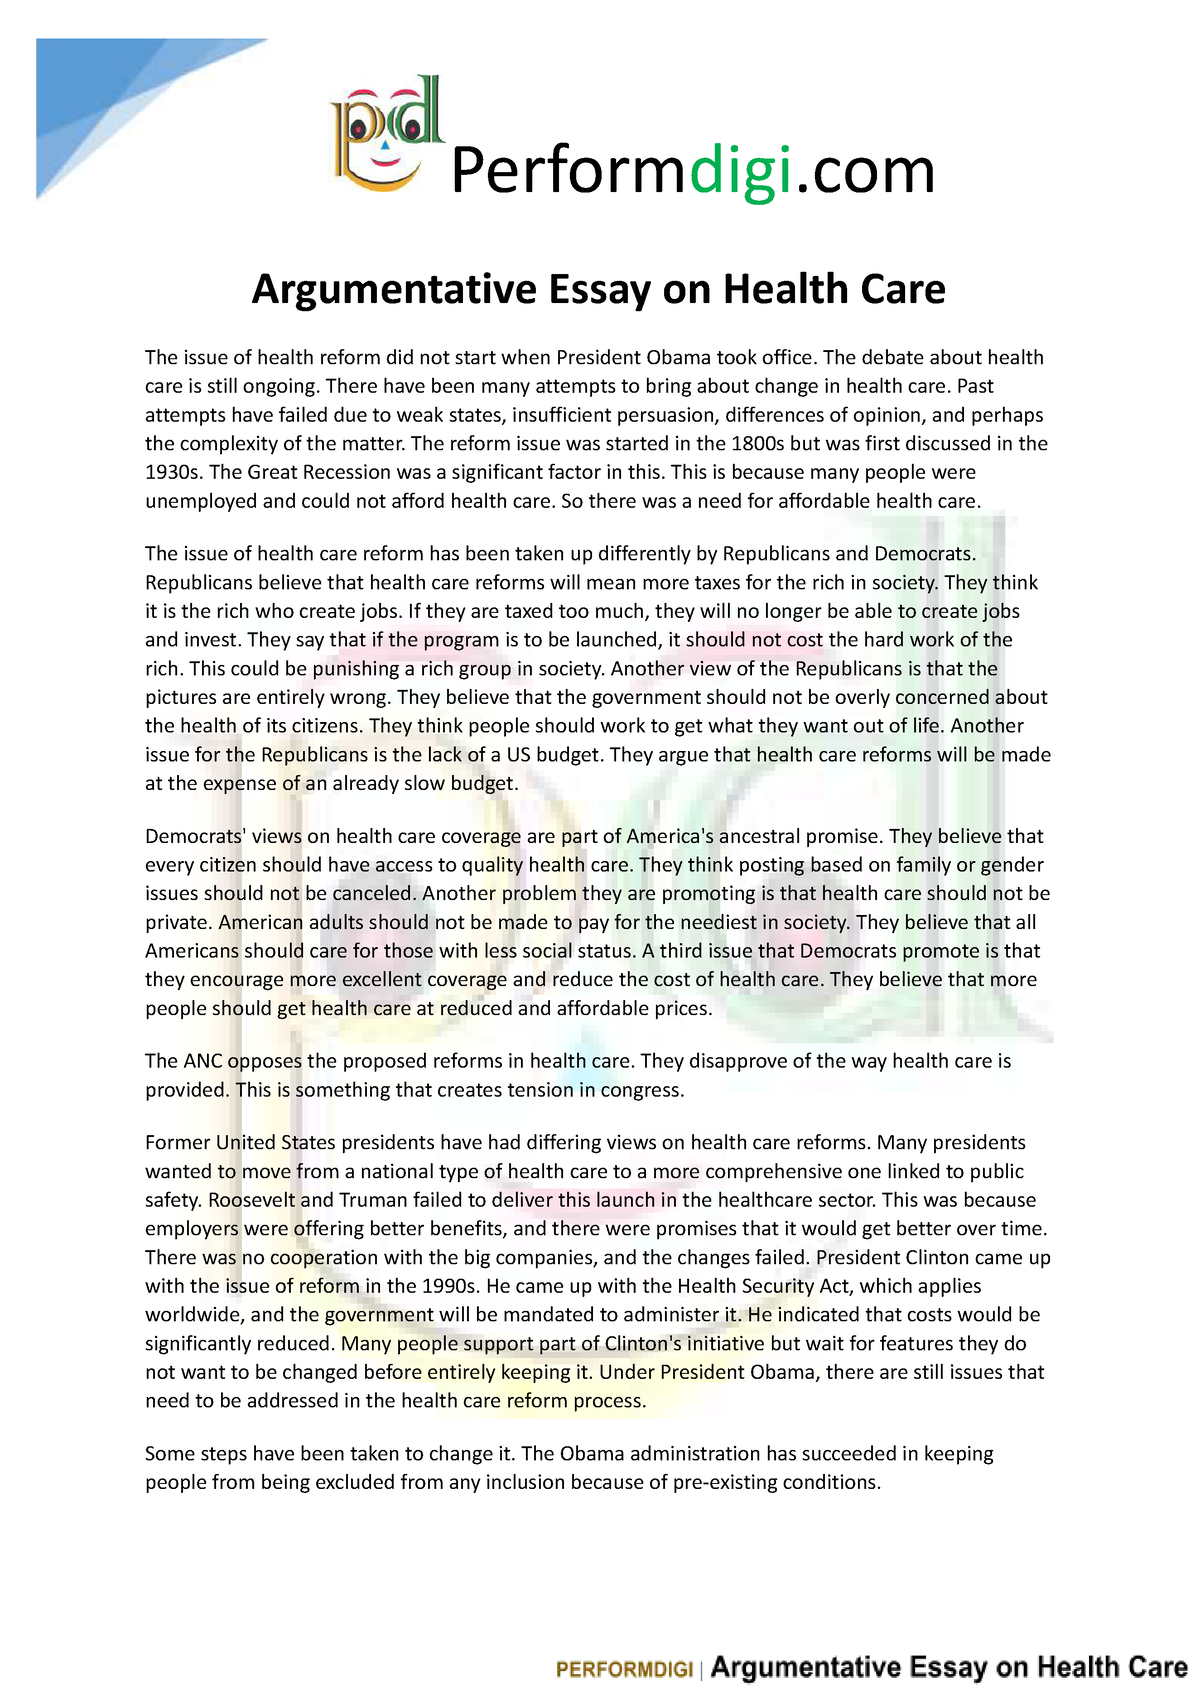 international healthcare essay